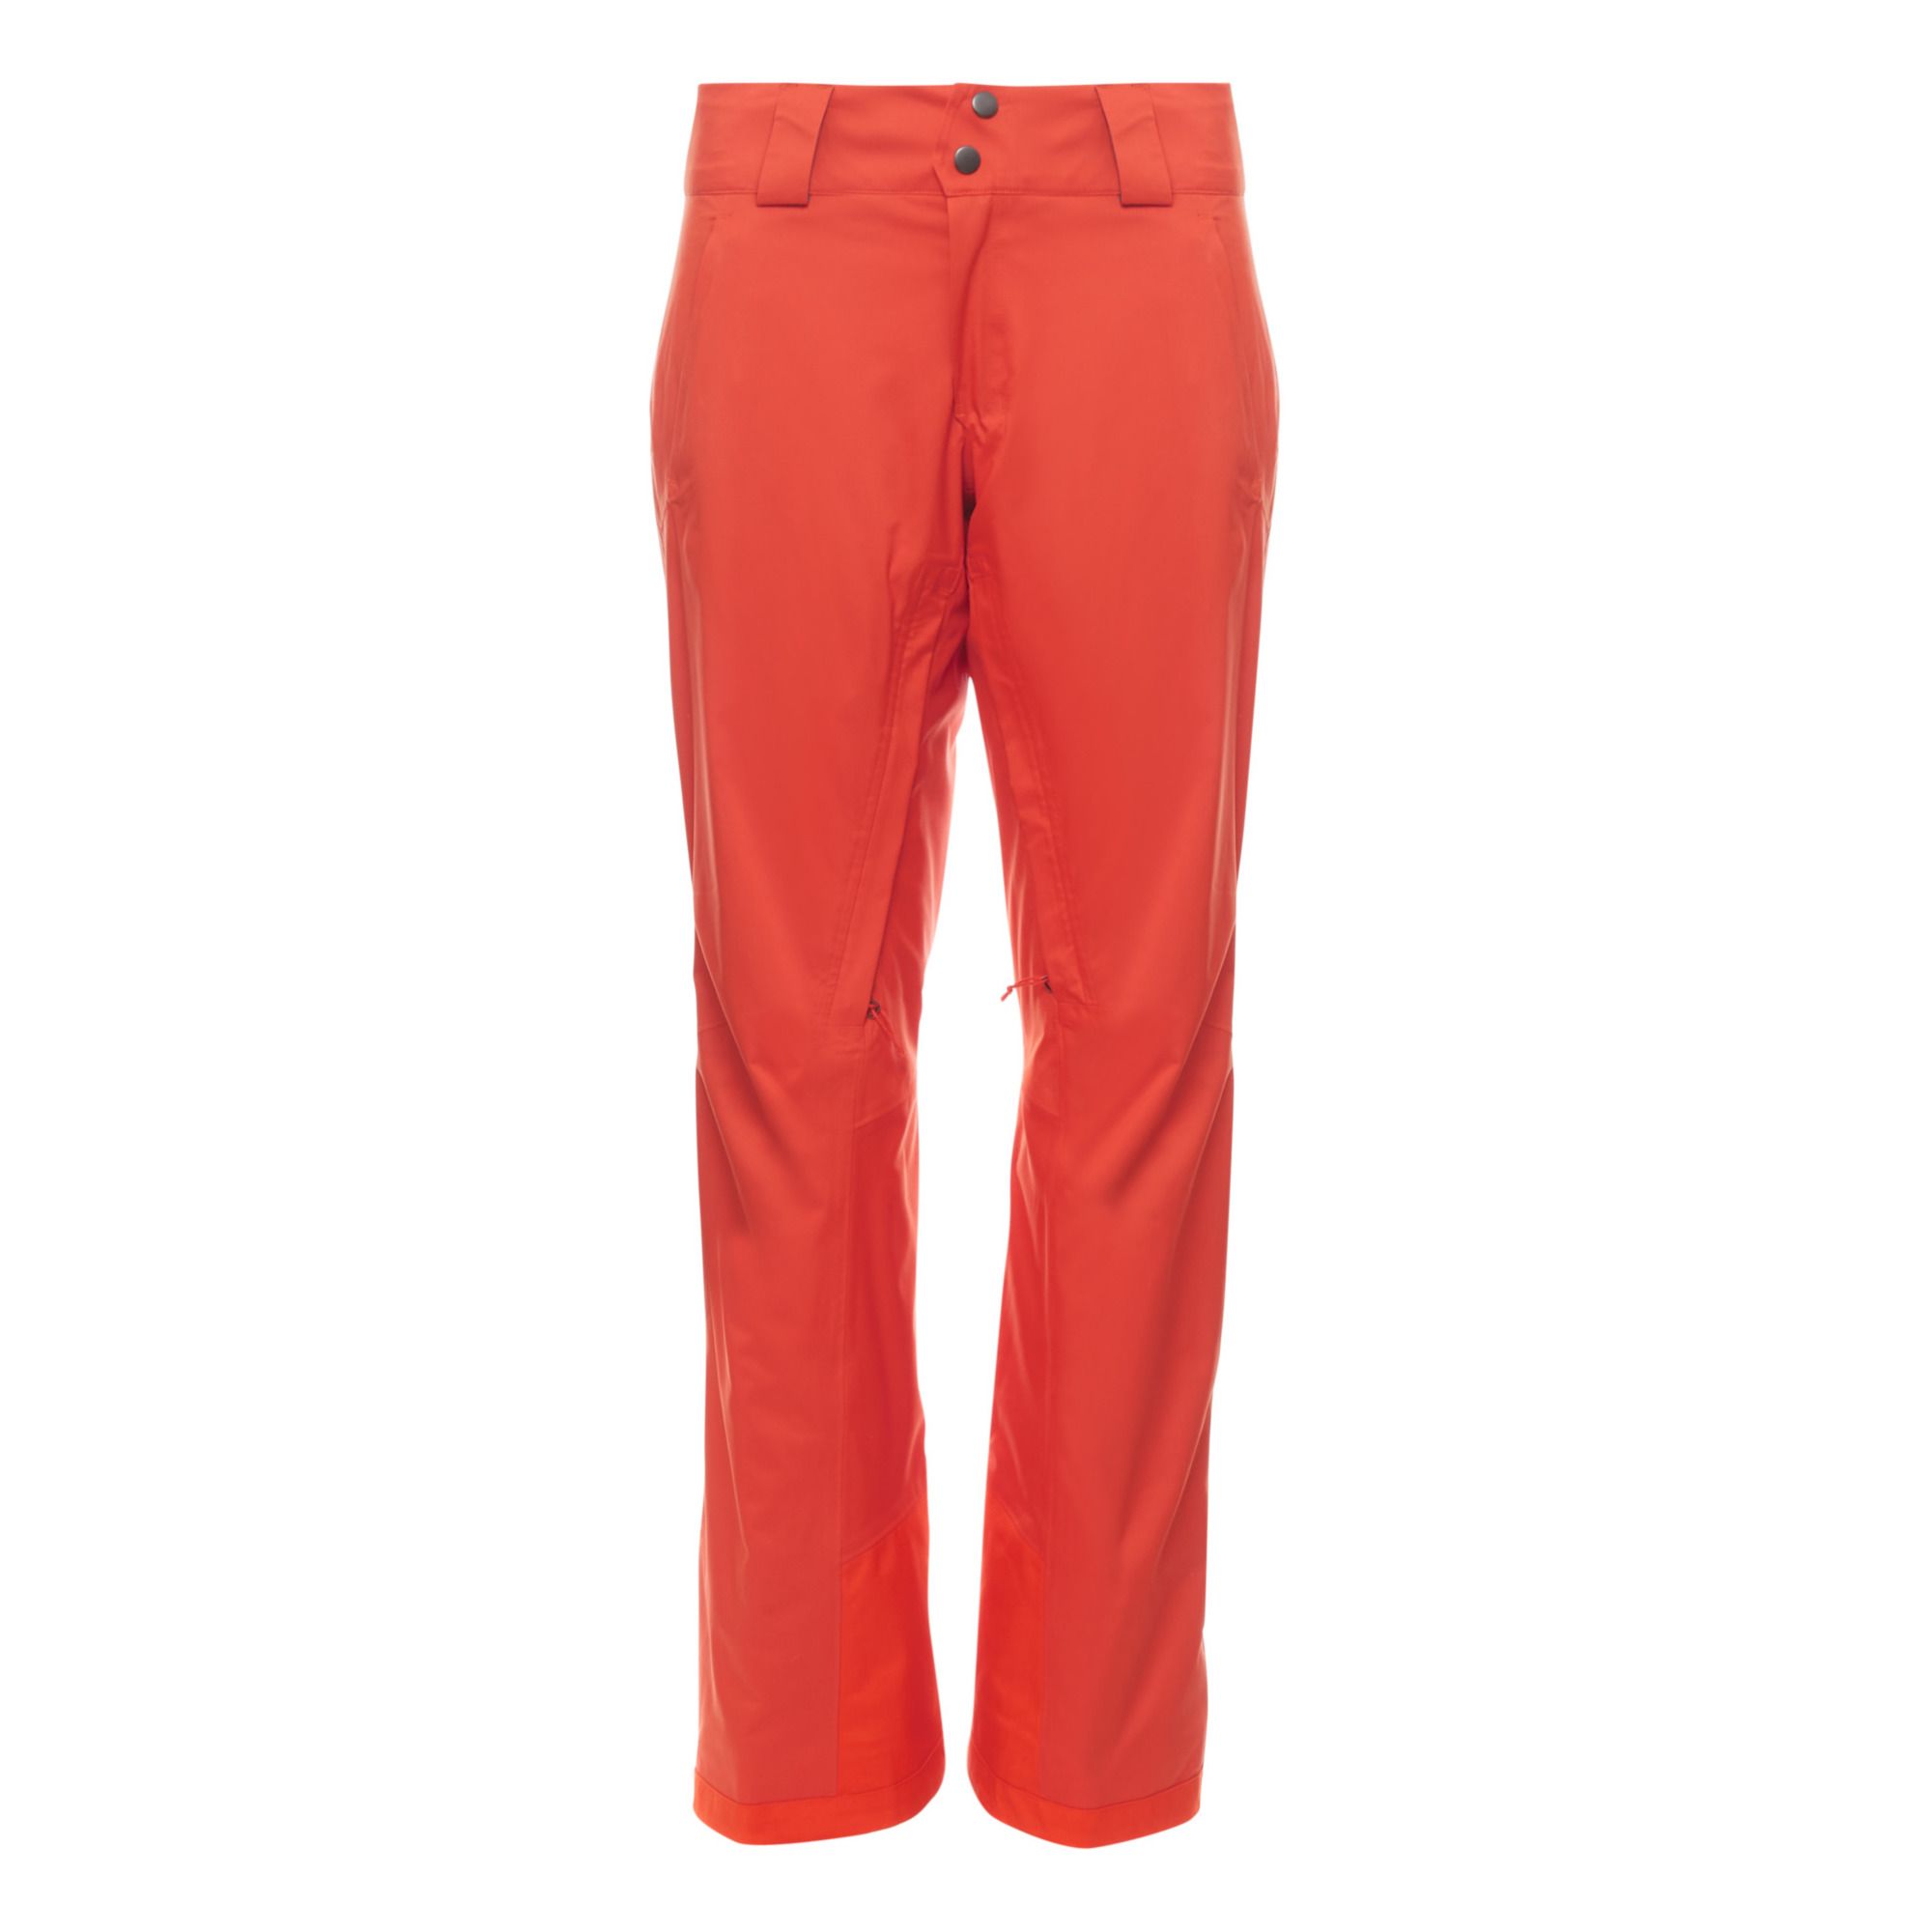 Patagonia - Pantalon de Ski Snowbelle - Collection Femme - - Orange